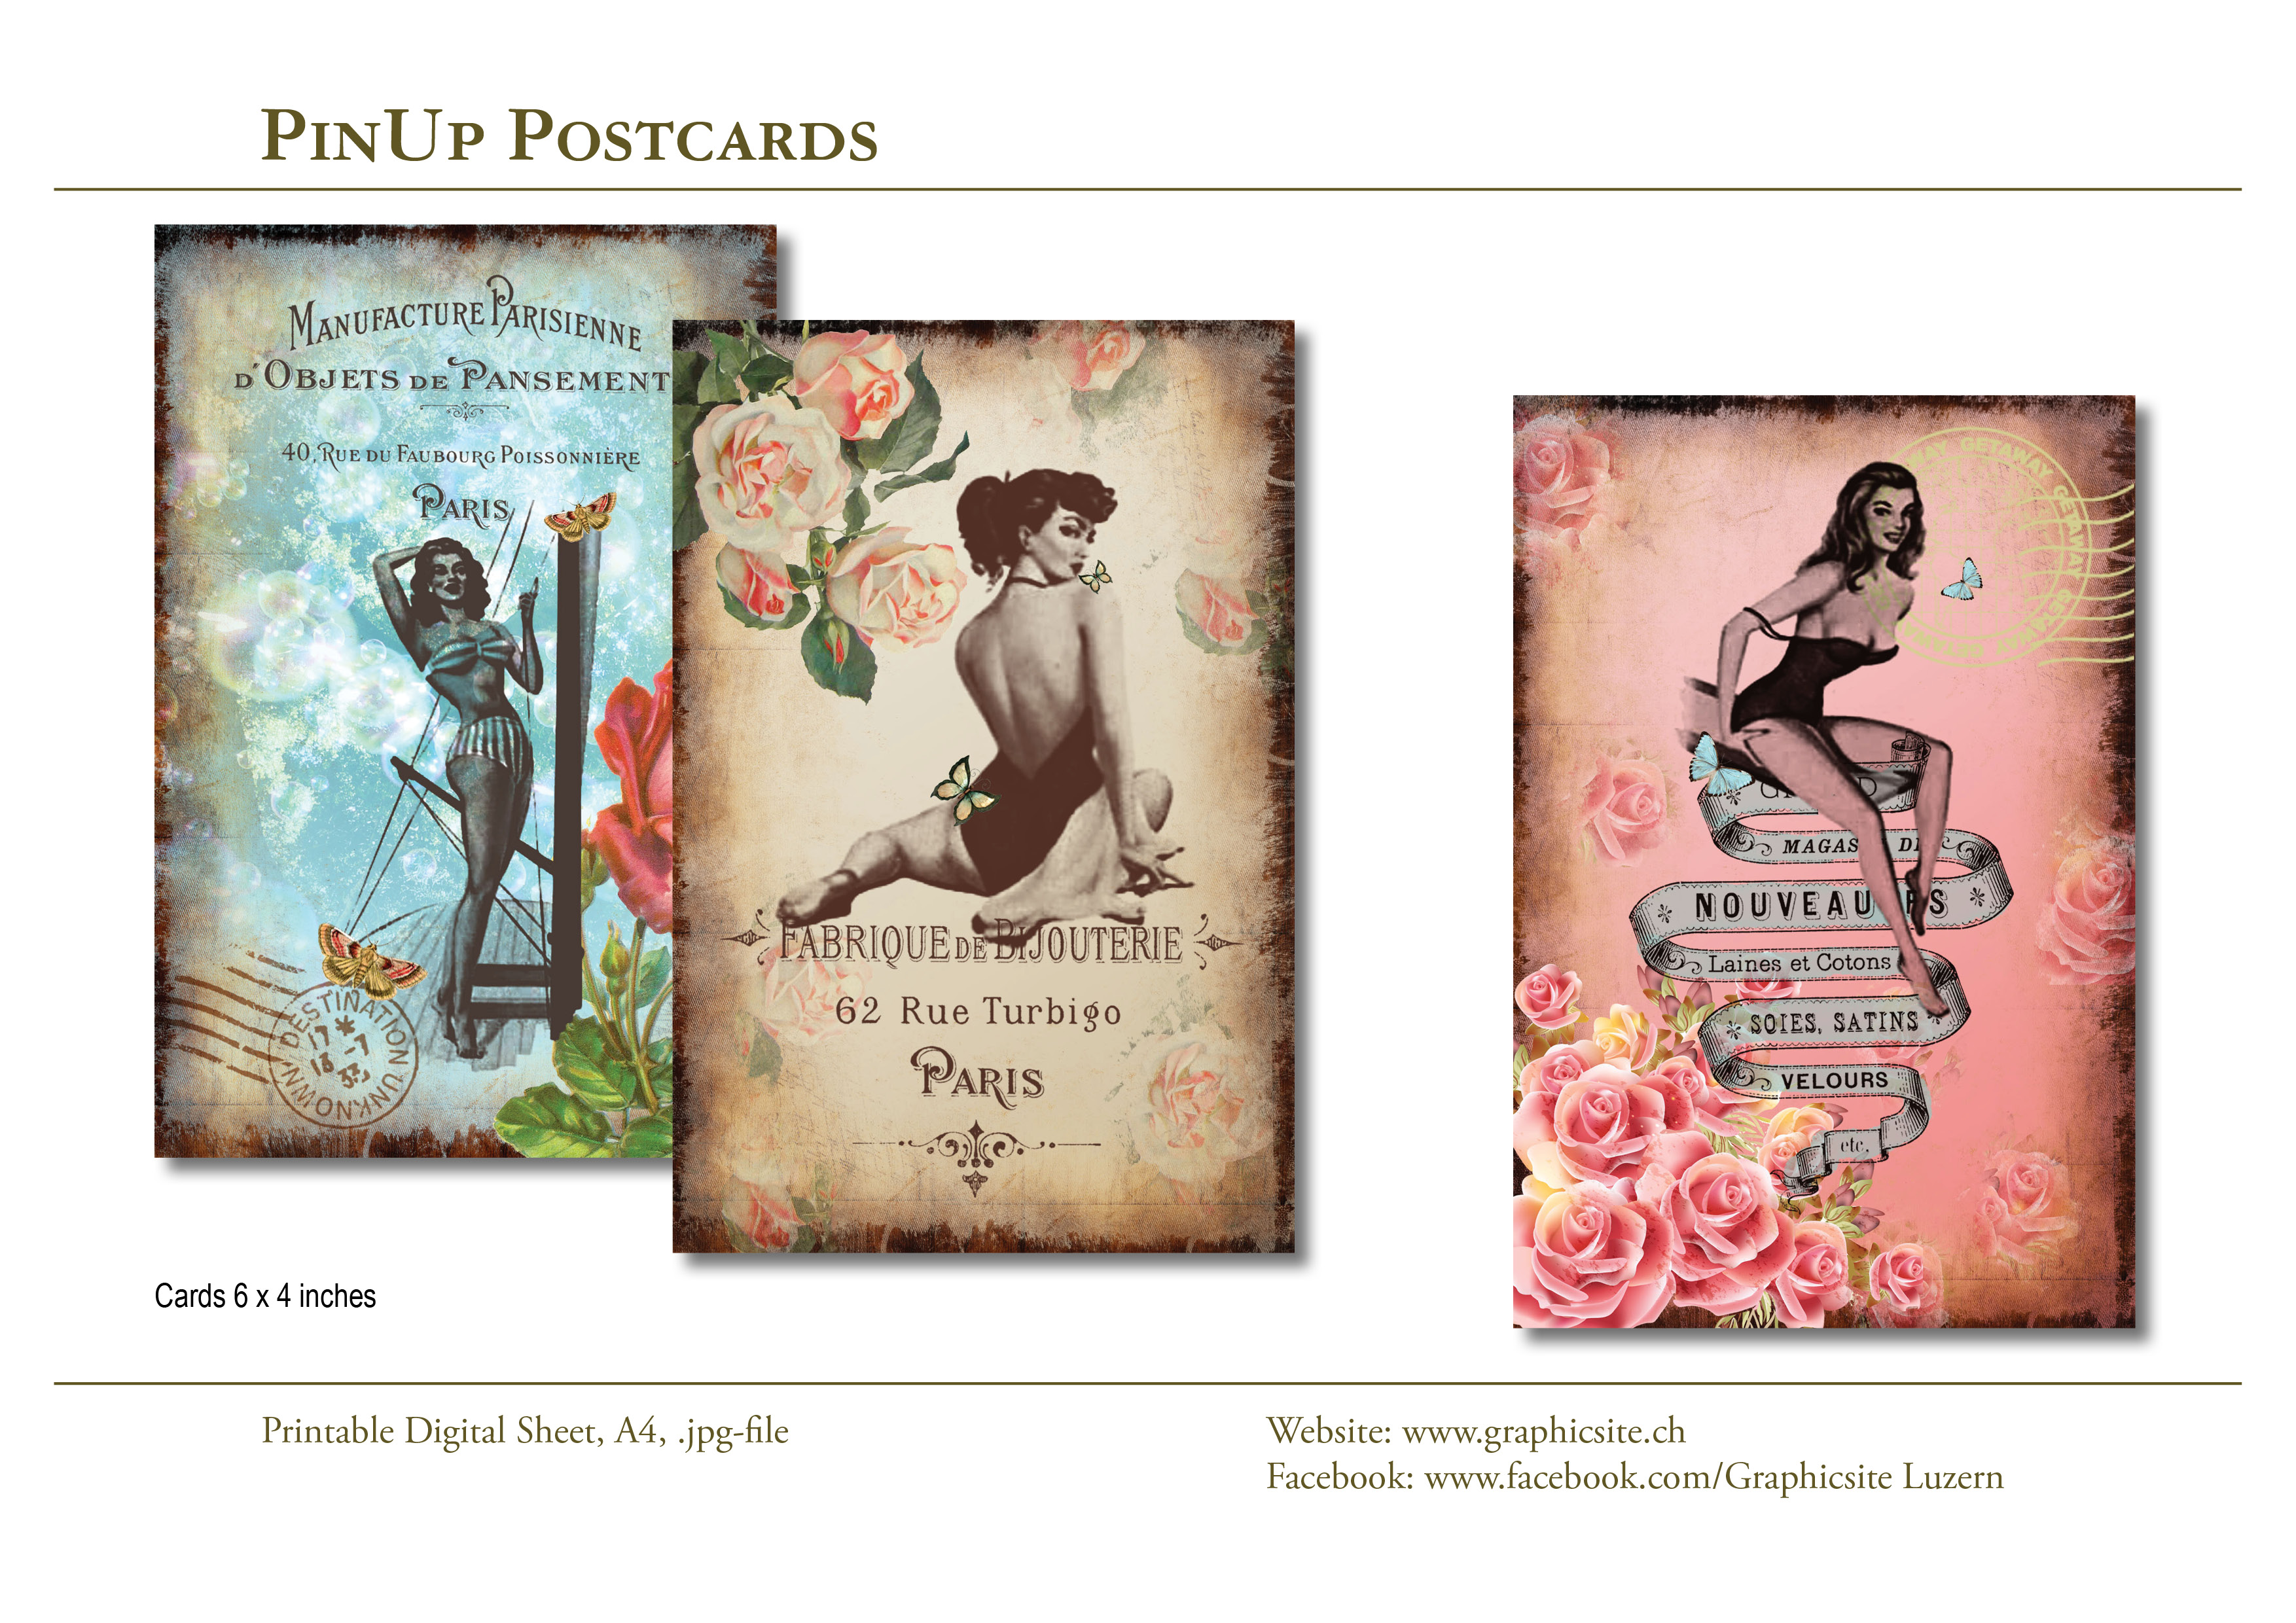 Printable Digital Sheets - 6x4 images - PinUp Postcards #postcards, #greetingcards, #tags 